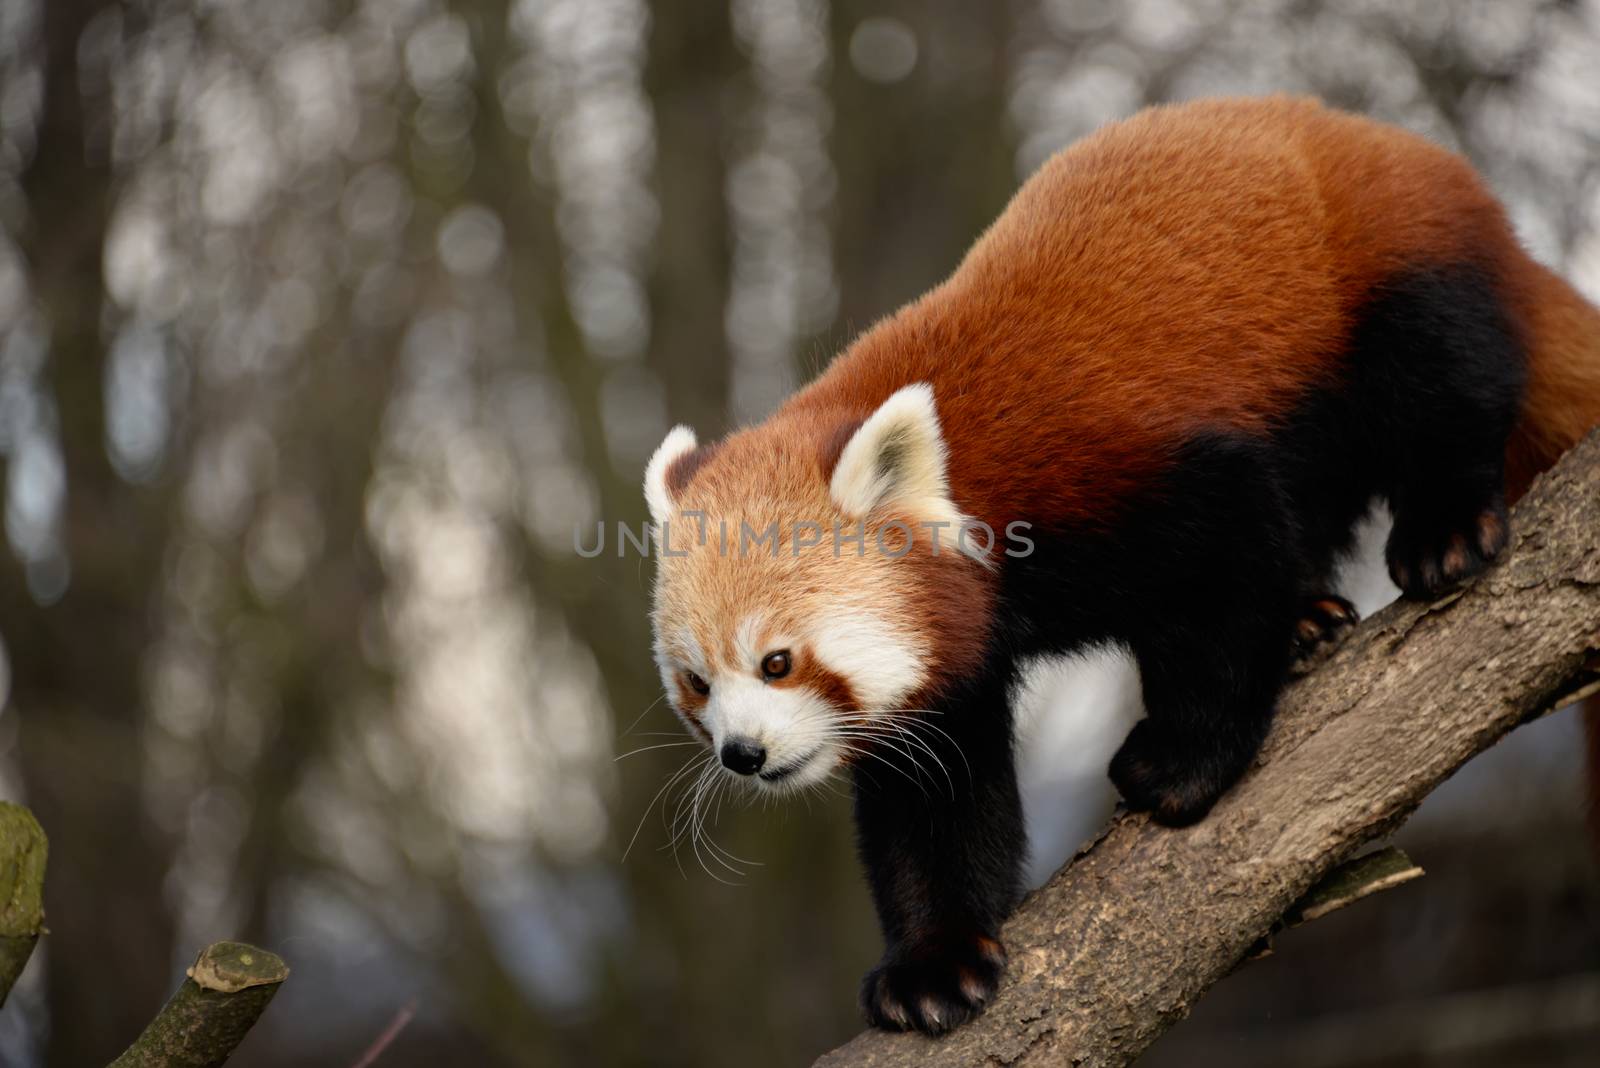 Red panda or lesser panda (Ailurus fulgens) on a branch.